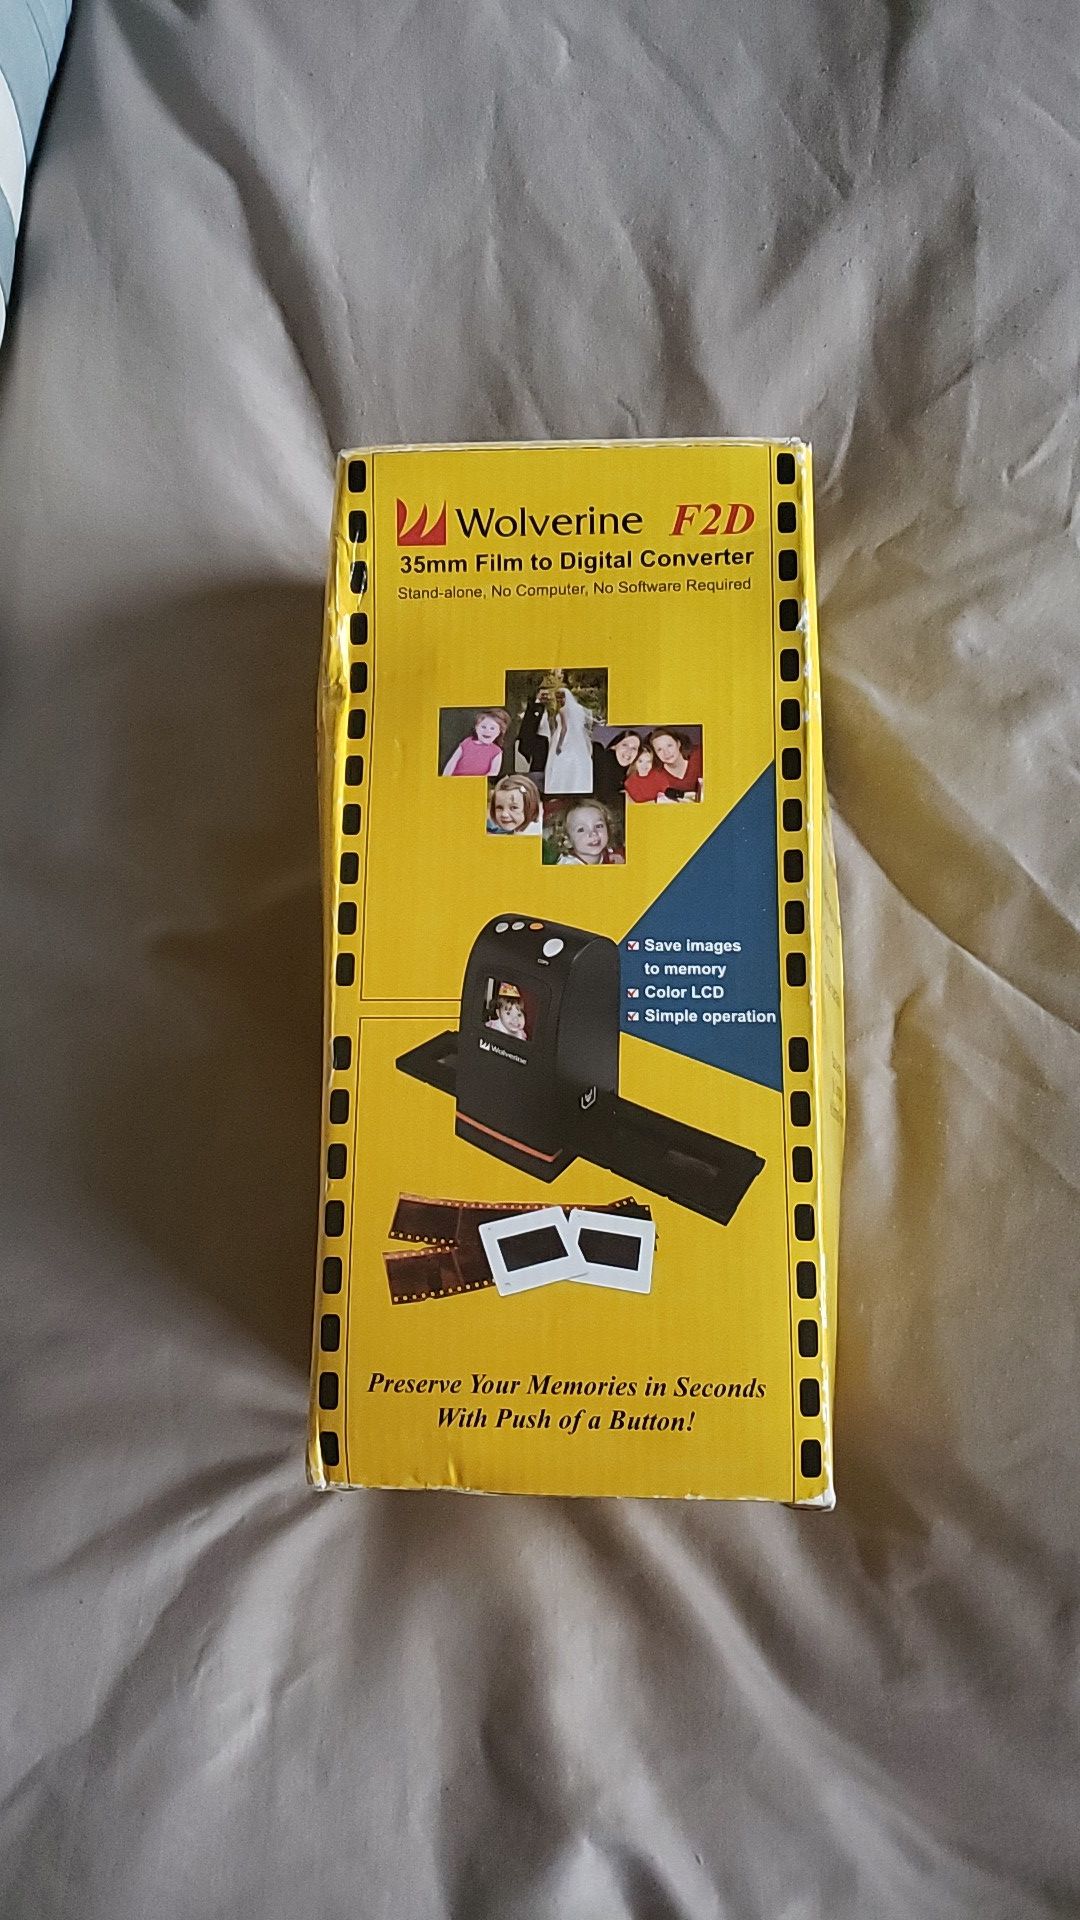 Wolverine F2D 35mm film to digital converter